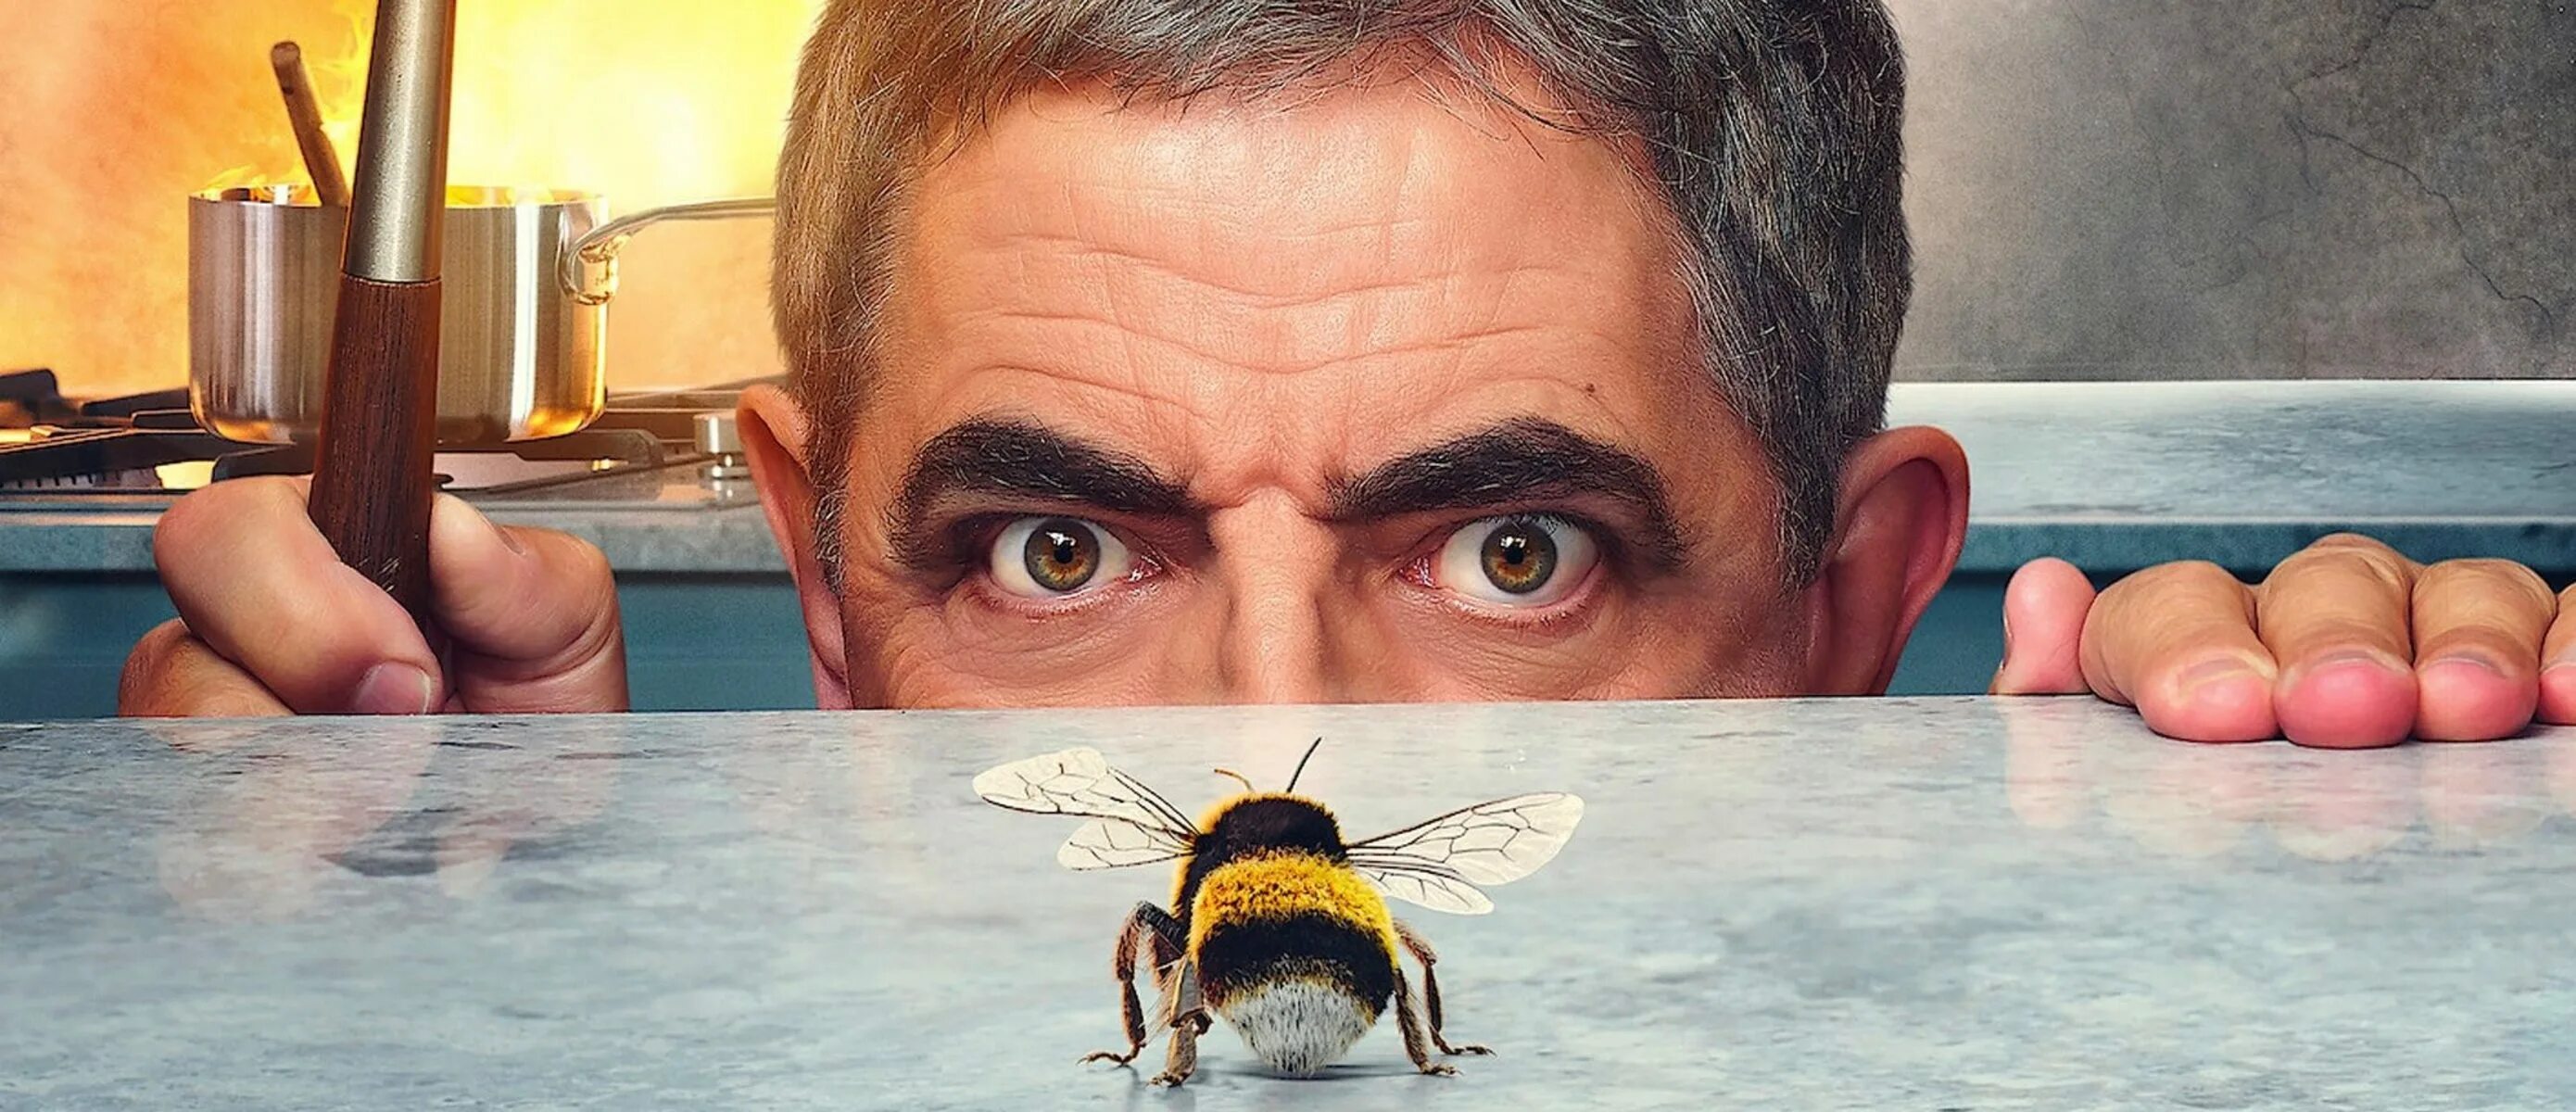 Включи люди стали. Мистер Бин и пчела. Человек против пчелы Роуэн Аткинсон.